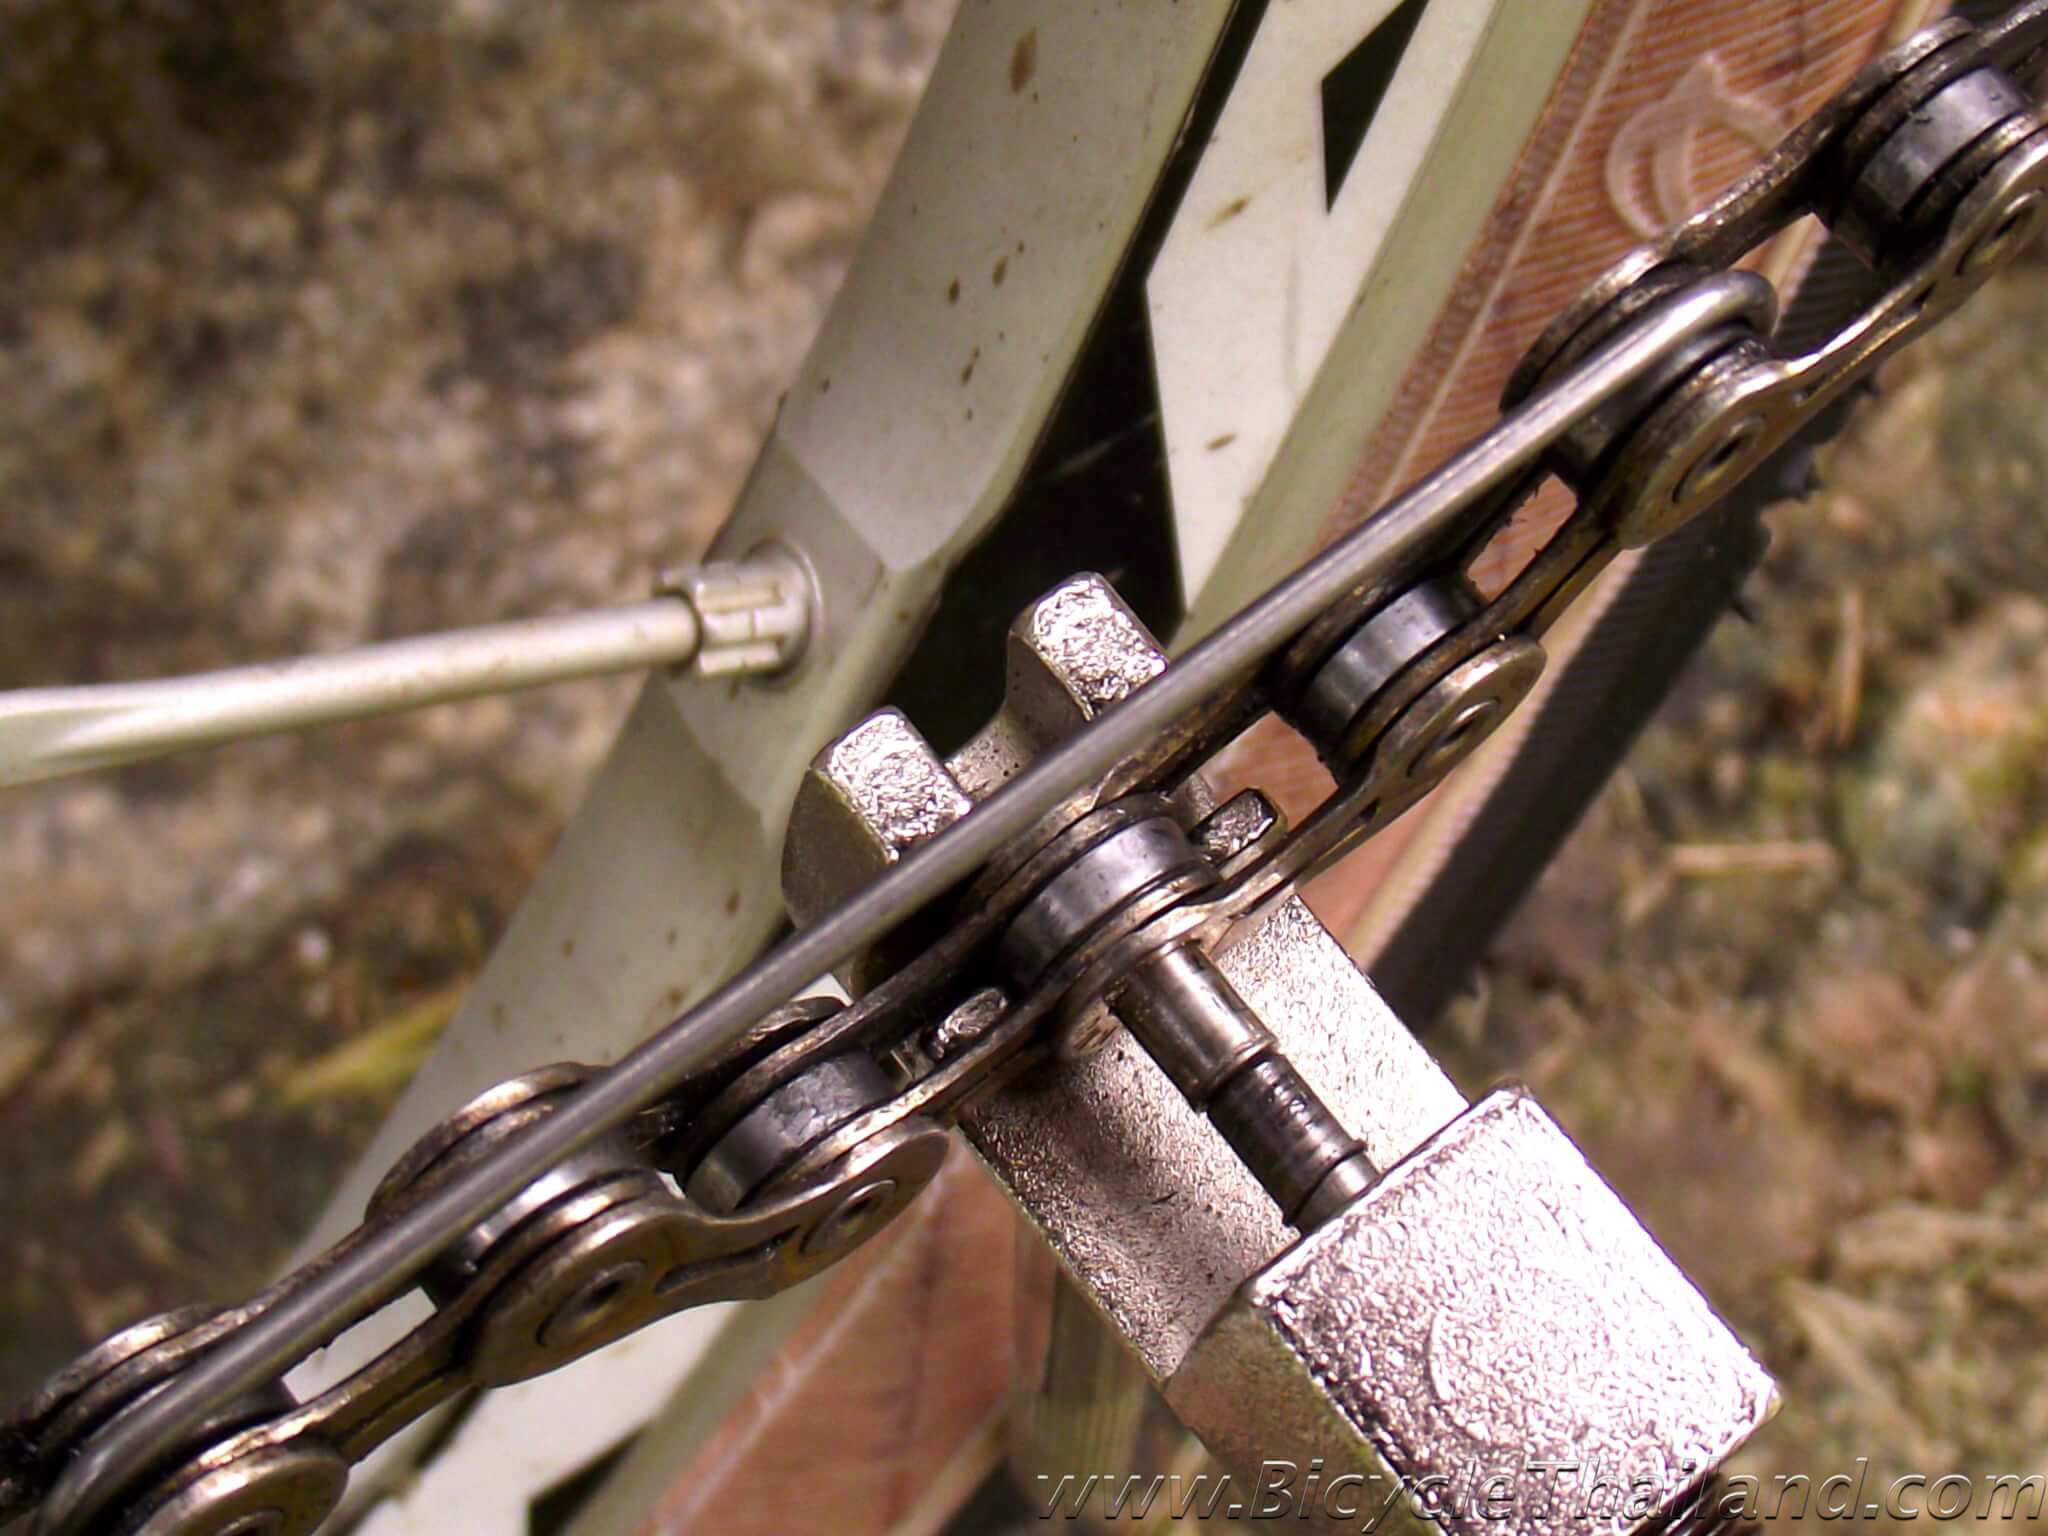 Fixing a Broken Bicycle Chain - Broken Chain 6wtmk